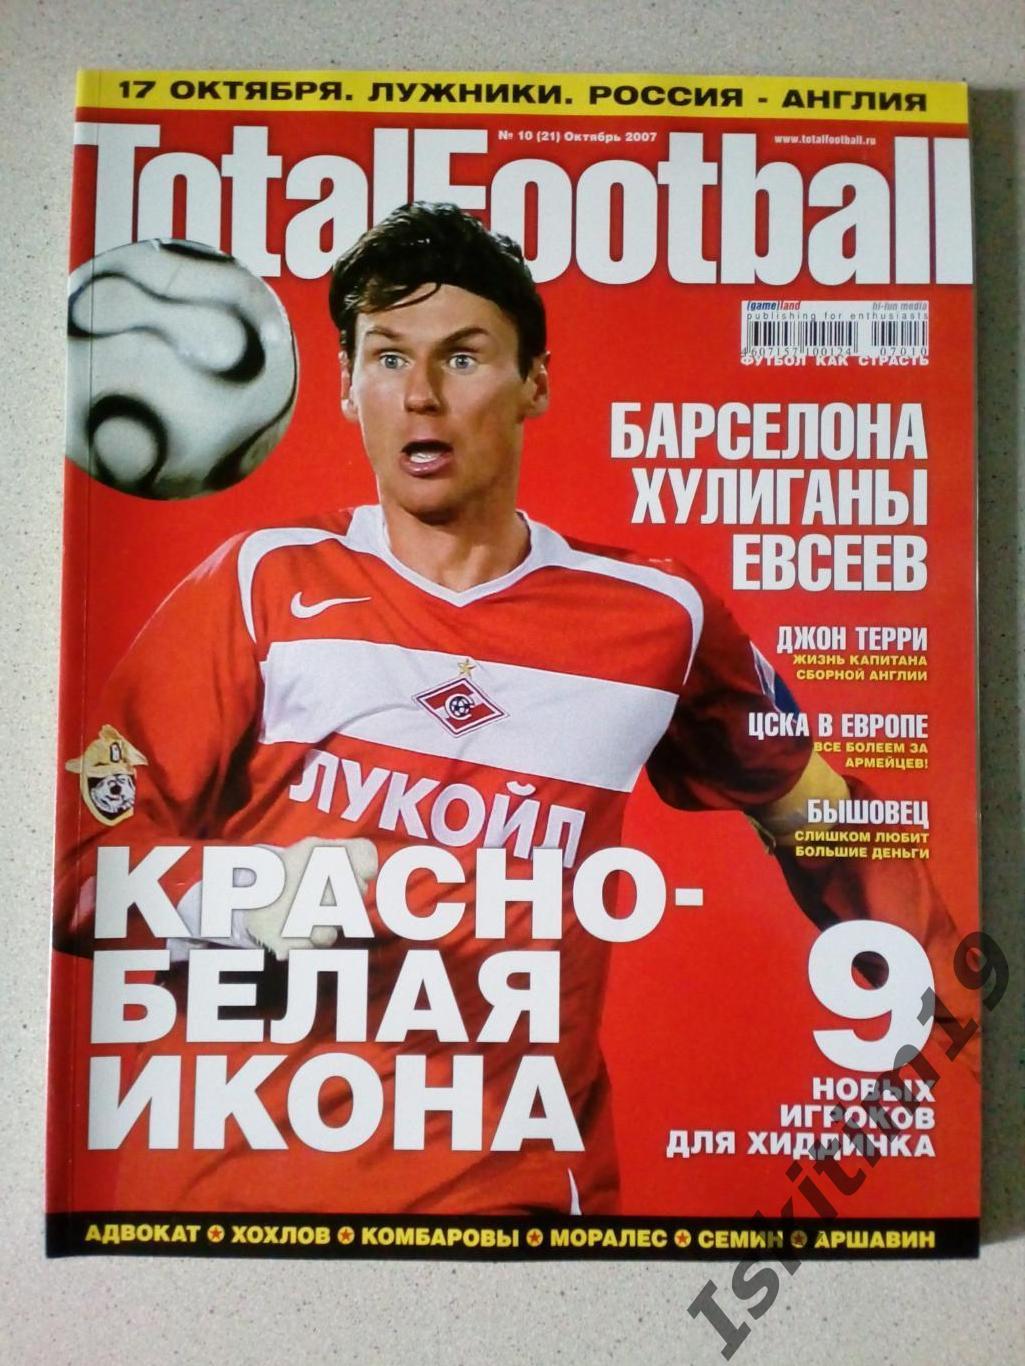 Total Football (Тотал Футбол) № 10 (21) октябрь 2007